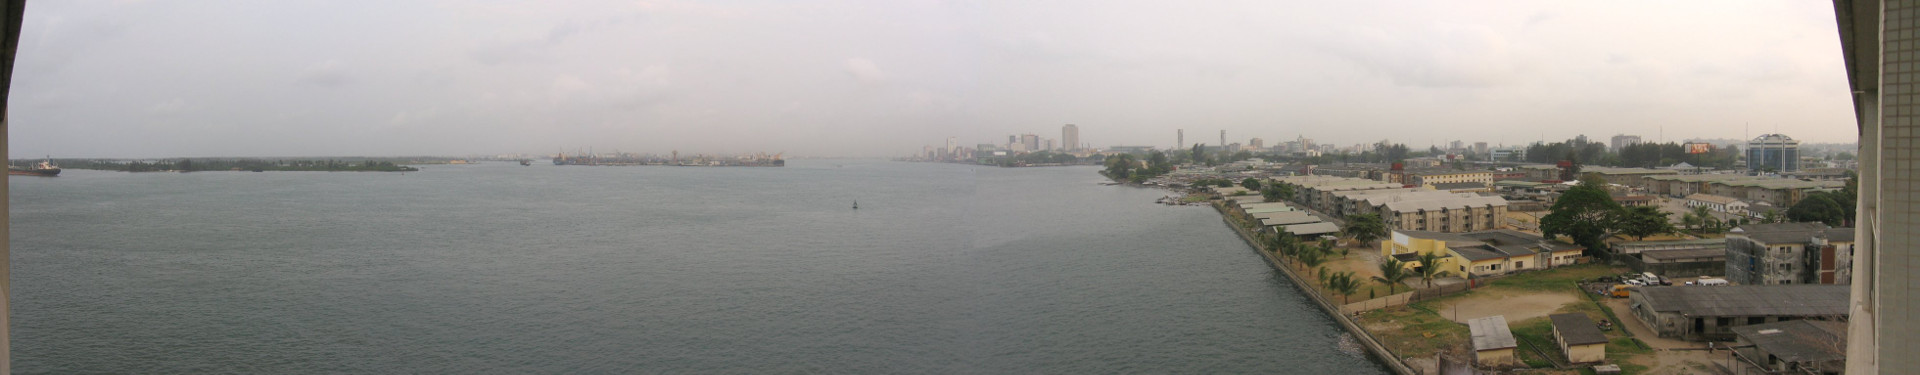 Lagos bay